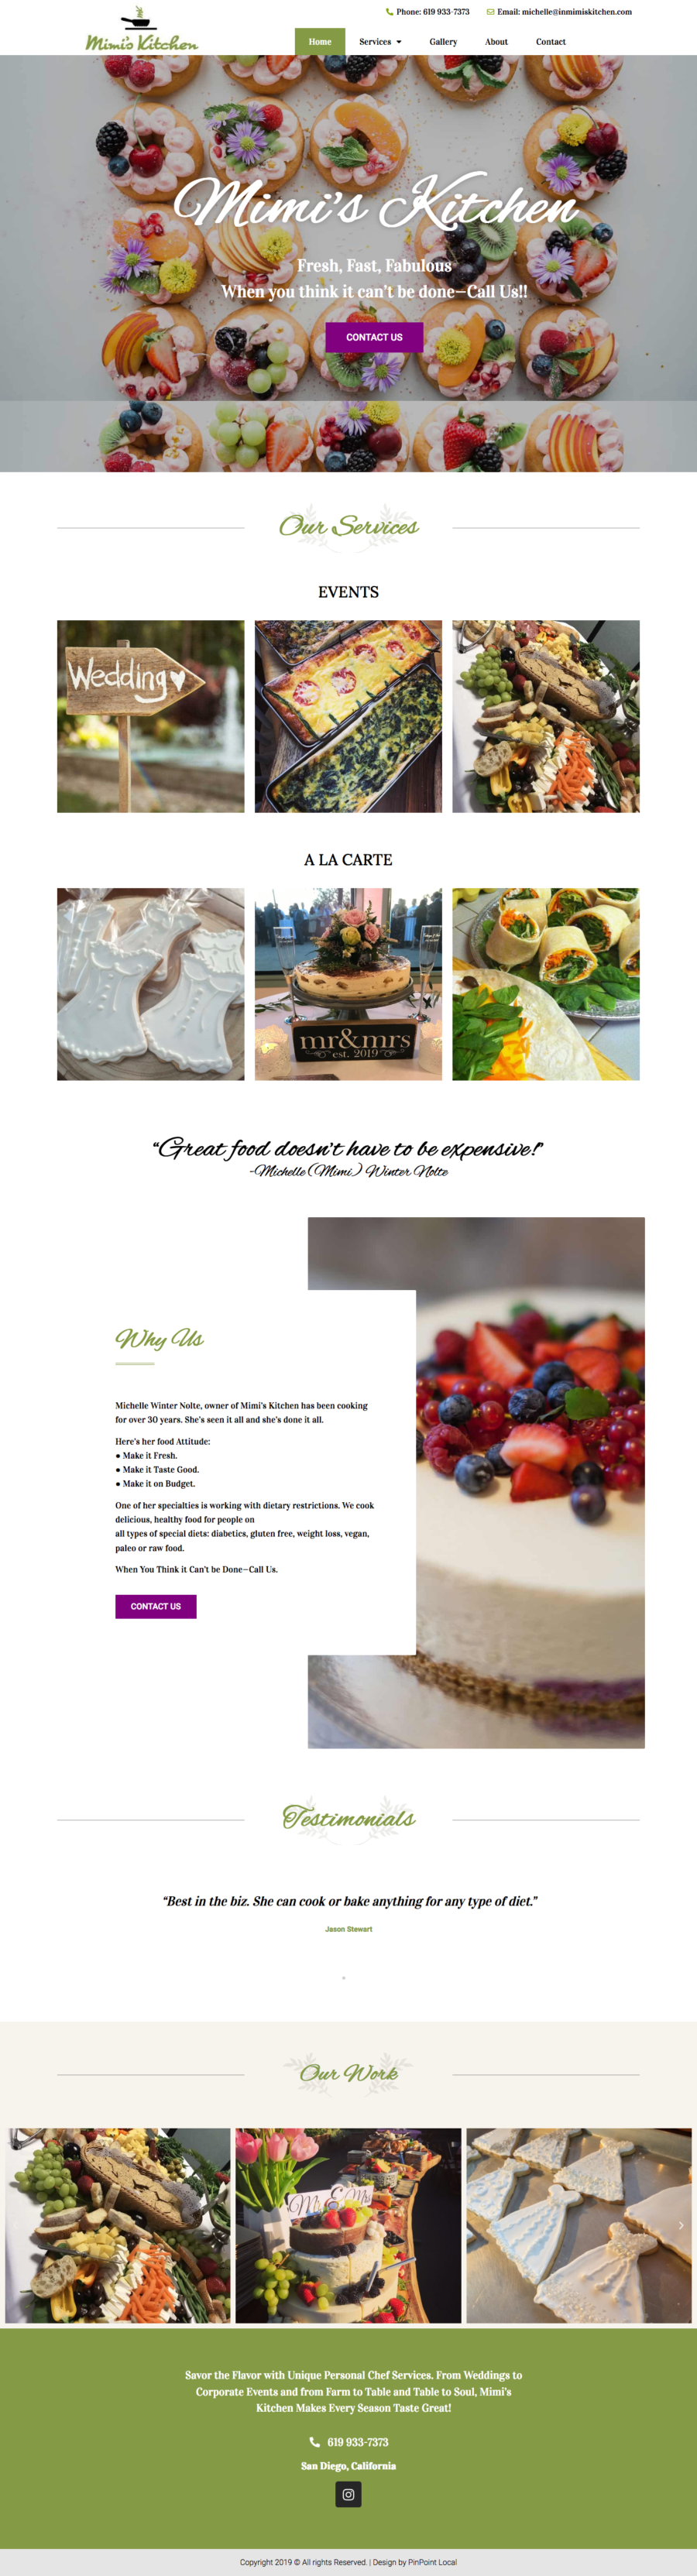 Mimis kitchen catering website design